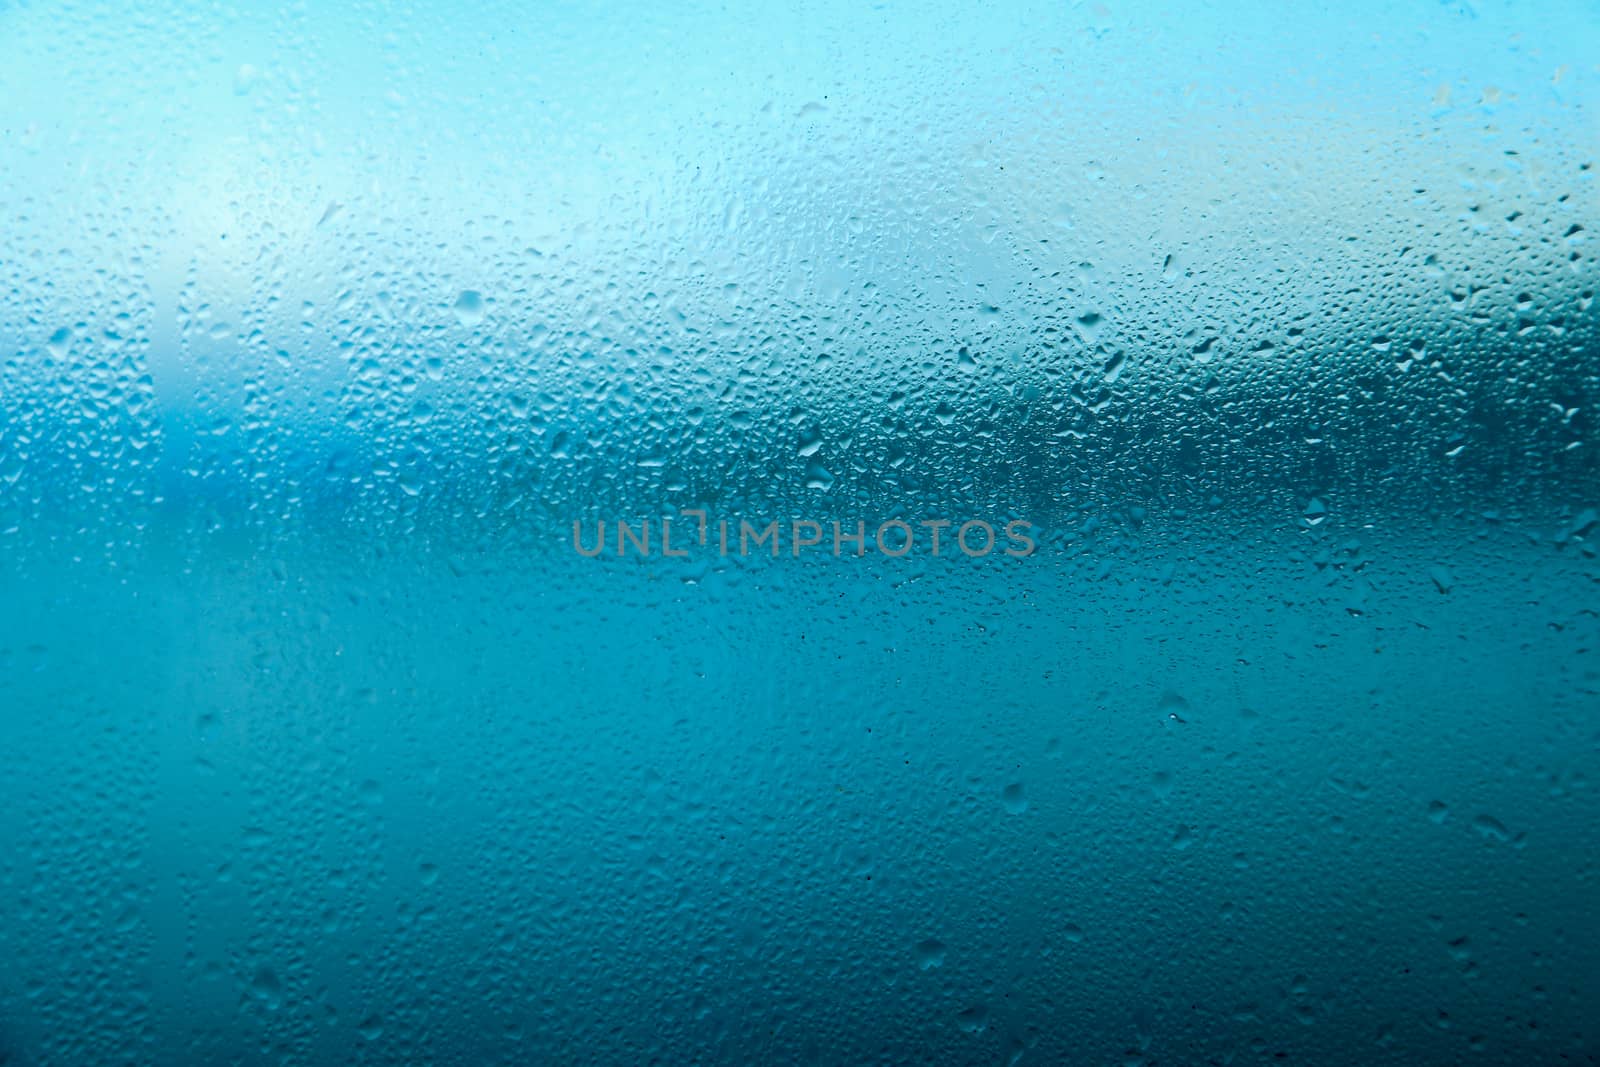 Realistic Image Raindrops on Window Glass